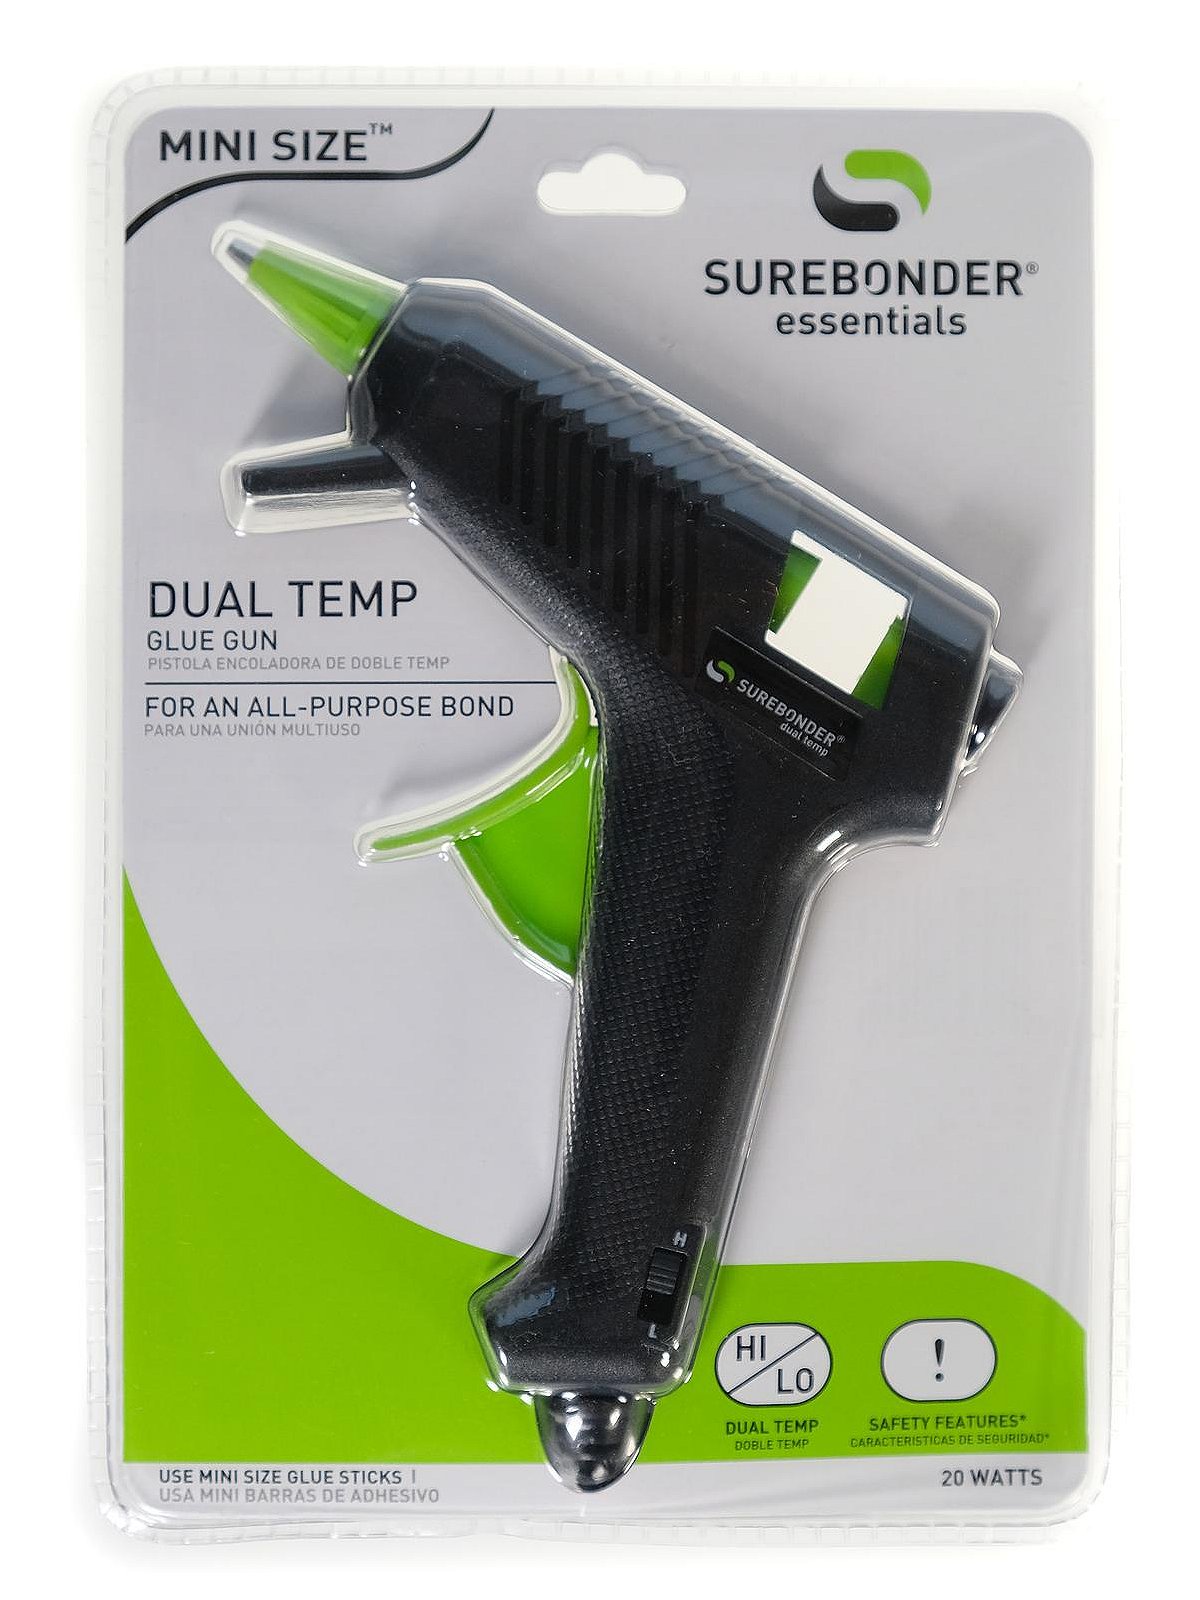 Surebonder Plus Mini Size Dual Temp Glue Gun with Sticks